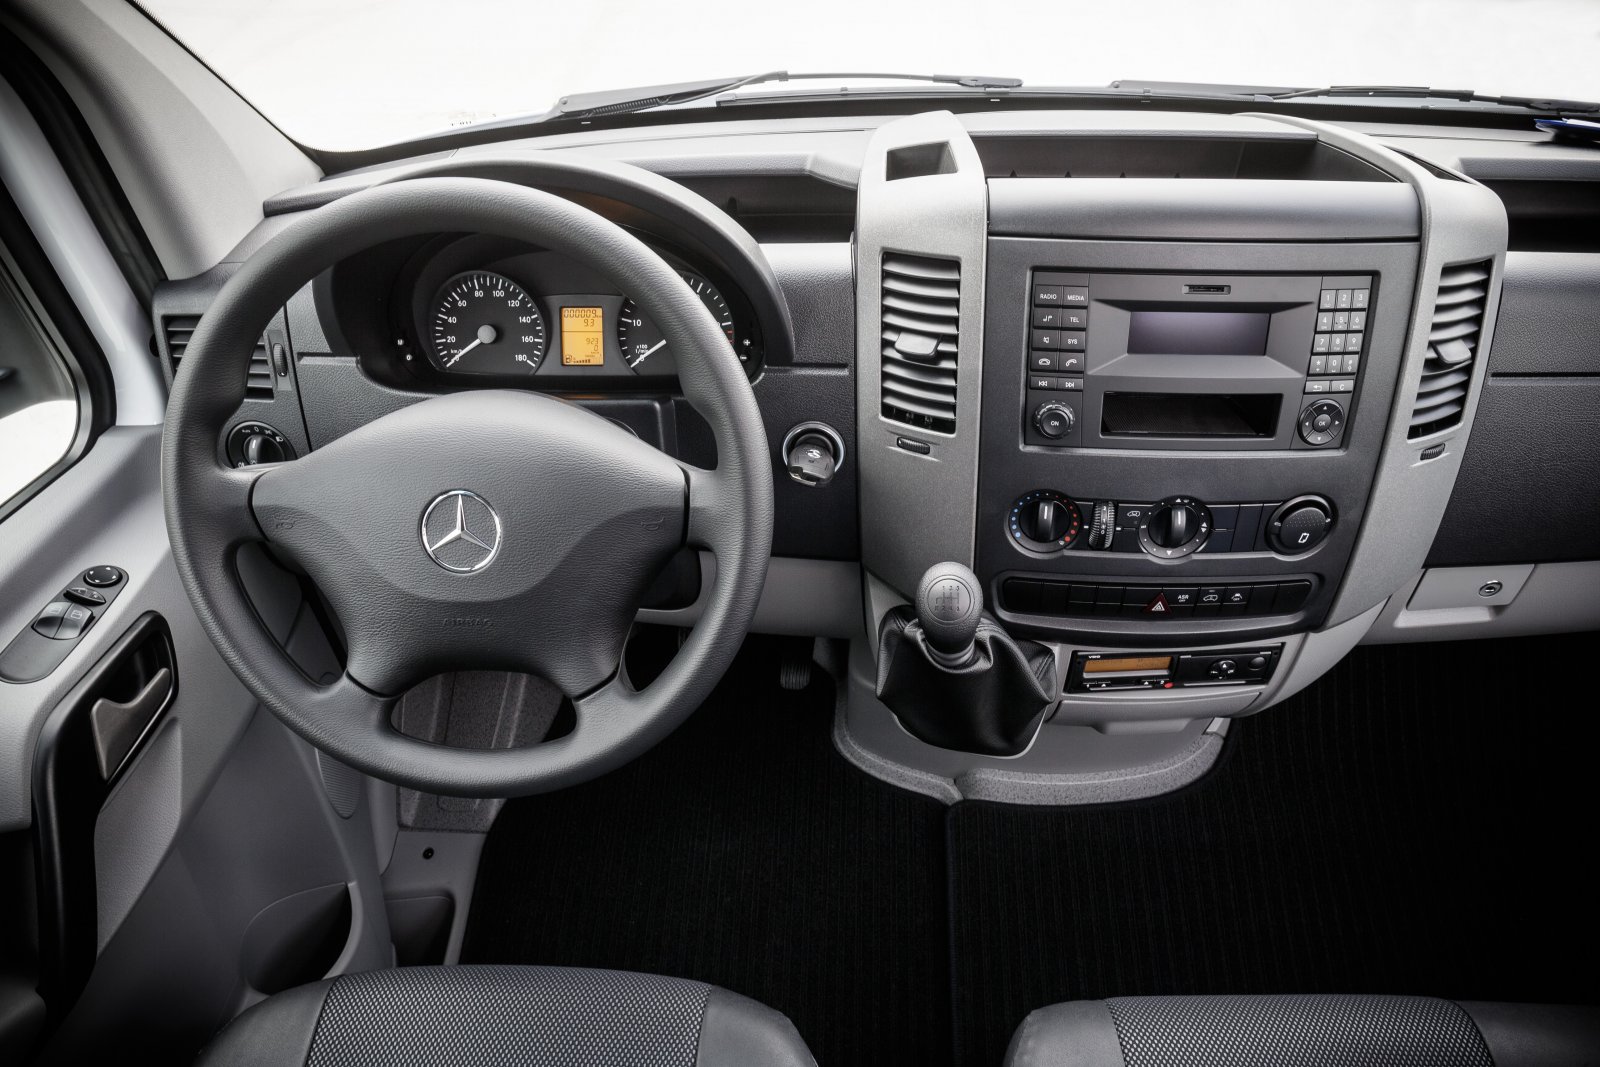 Mercedes-Benz Sprinter – 516 CDI; interiör; seat covers: tunja black; OM 651 motoreffekt 120 kW/163 hk; 6-växlad manuell växellåda Eco Gear; hjulbas: 3665 mm; totalvikt 5.5 ton